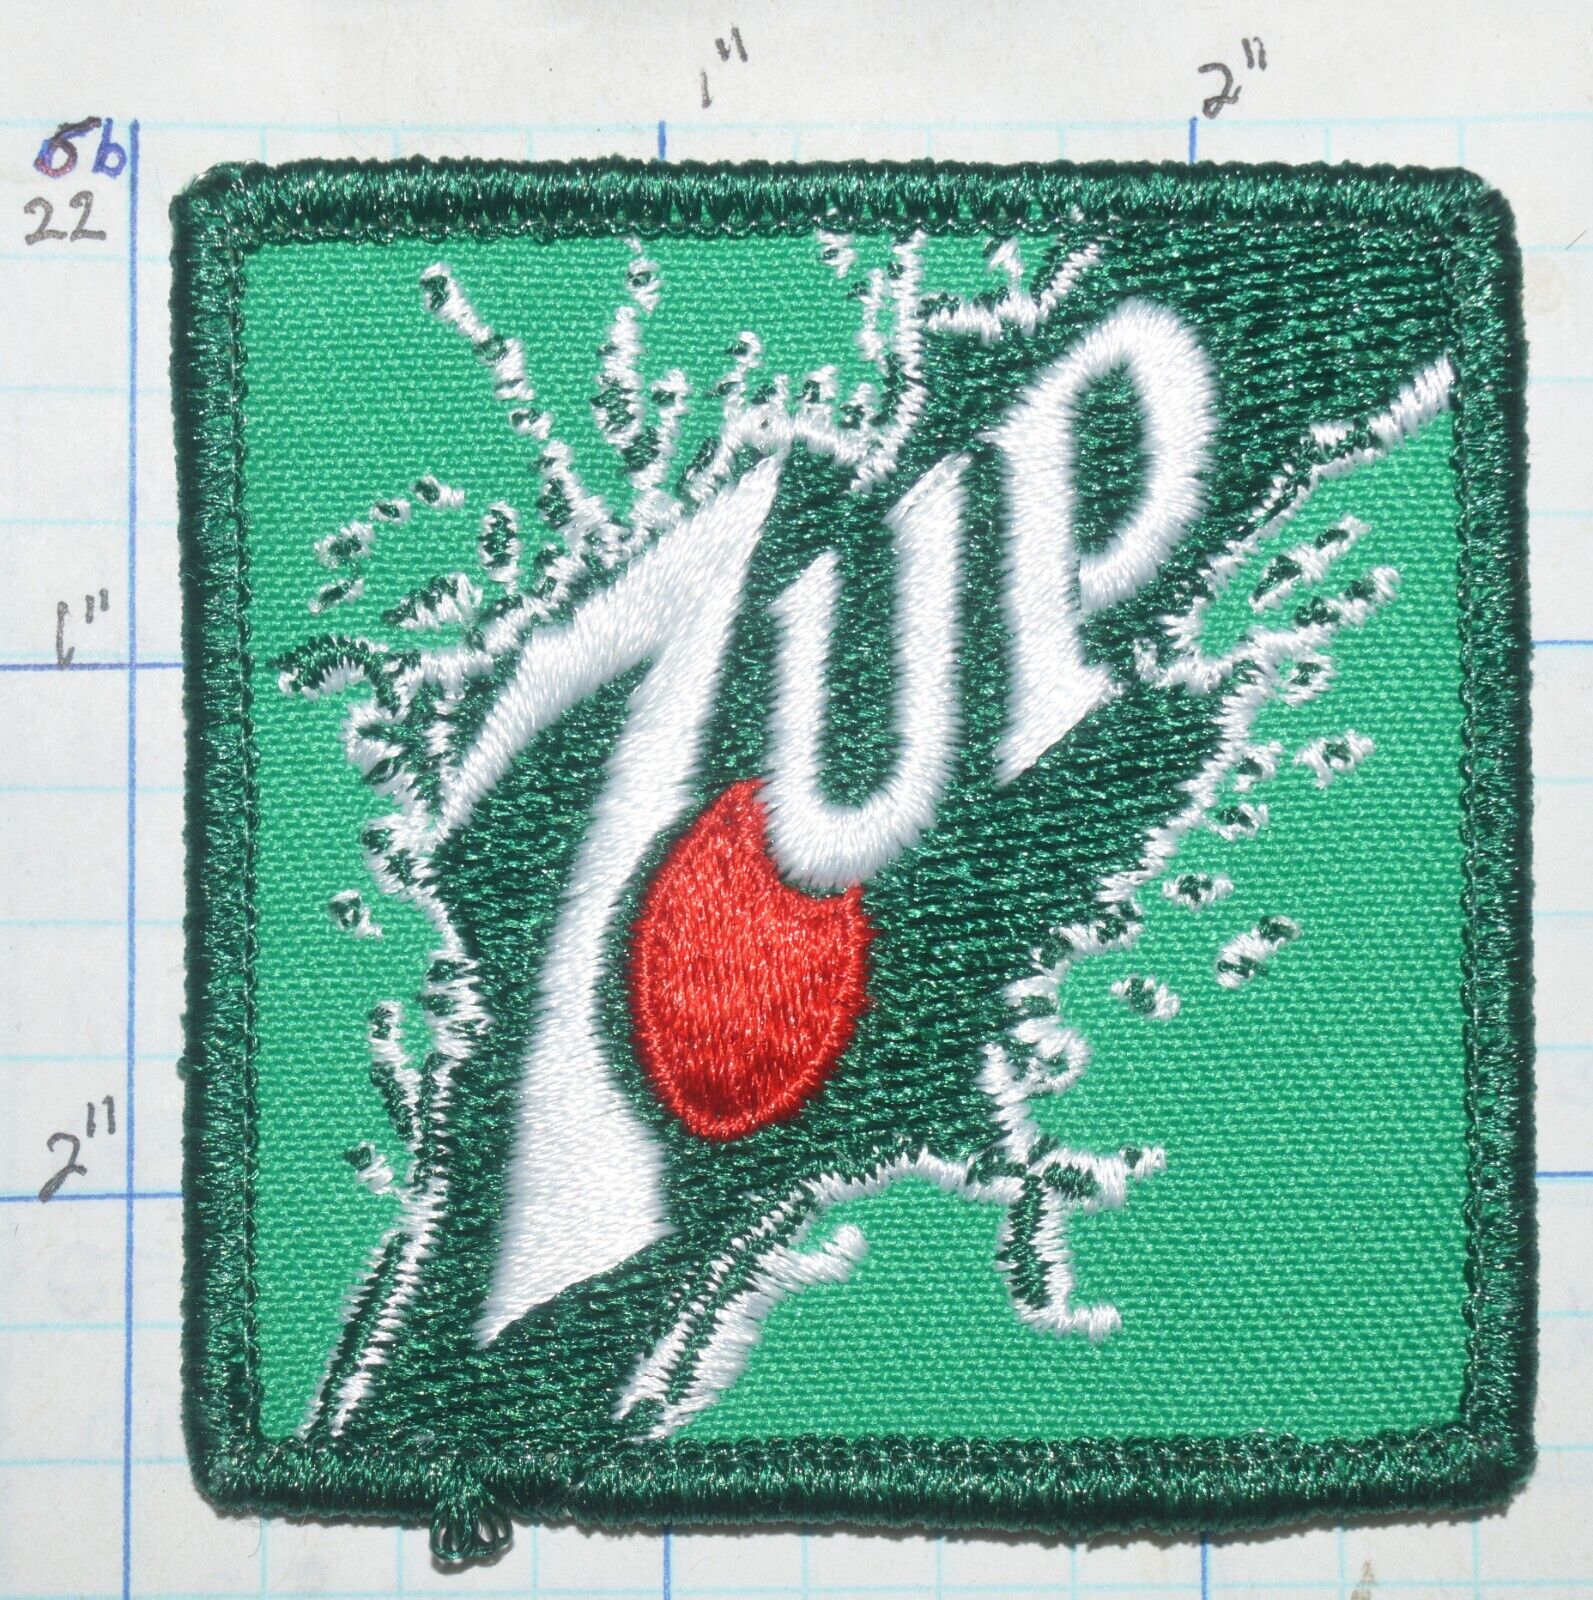 7UP 7-UP SODA POP BEVERAGE ADVERTISING LOGO UNUSED 2.5